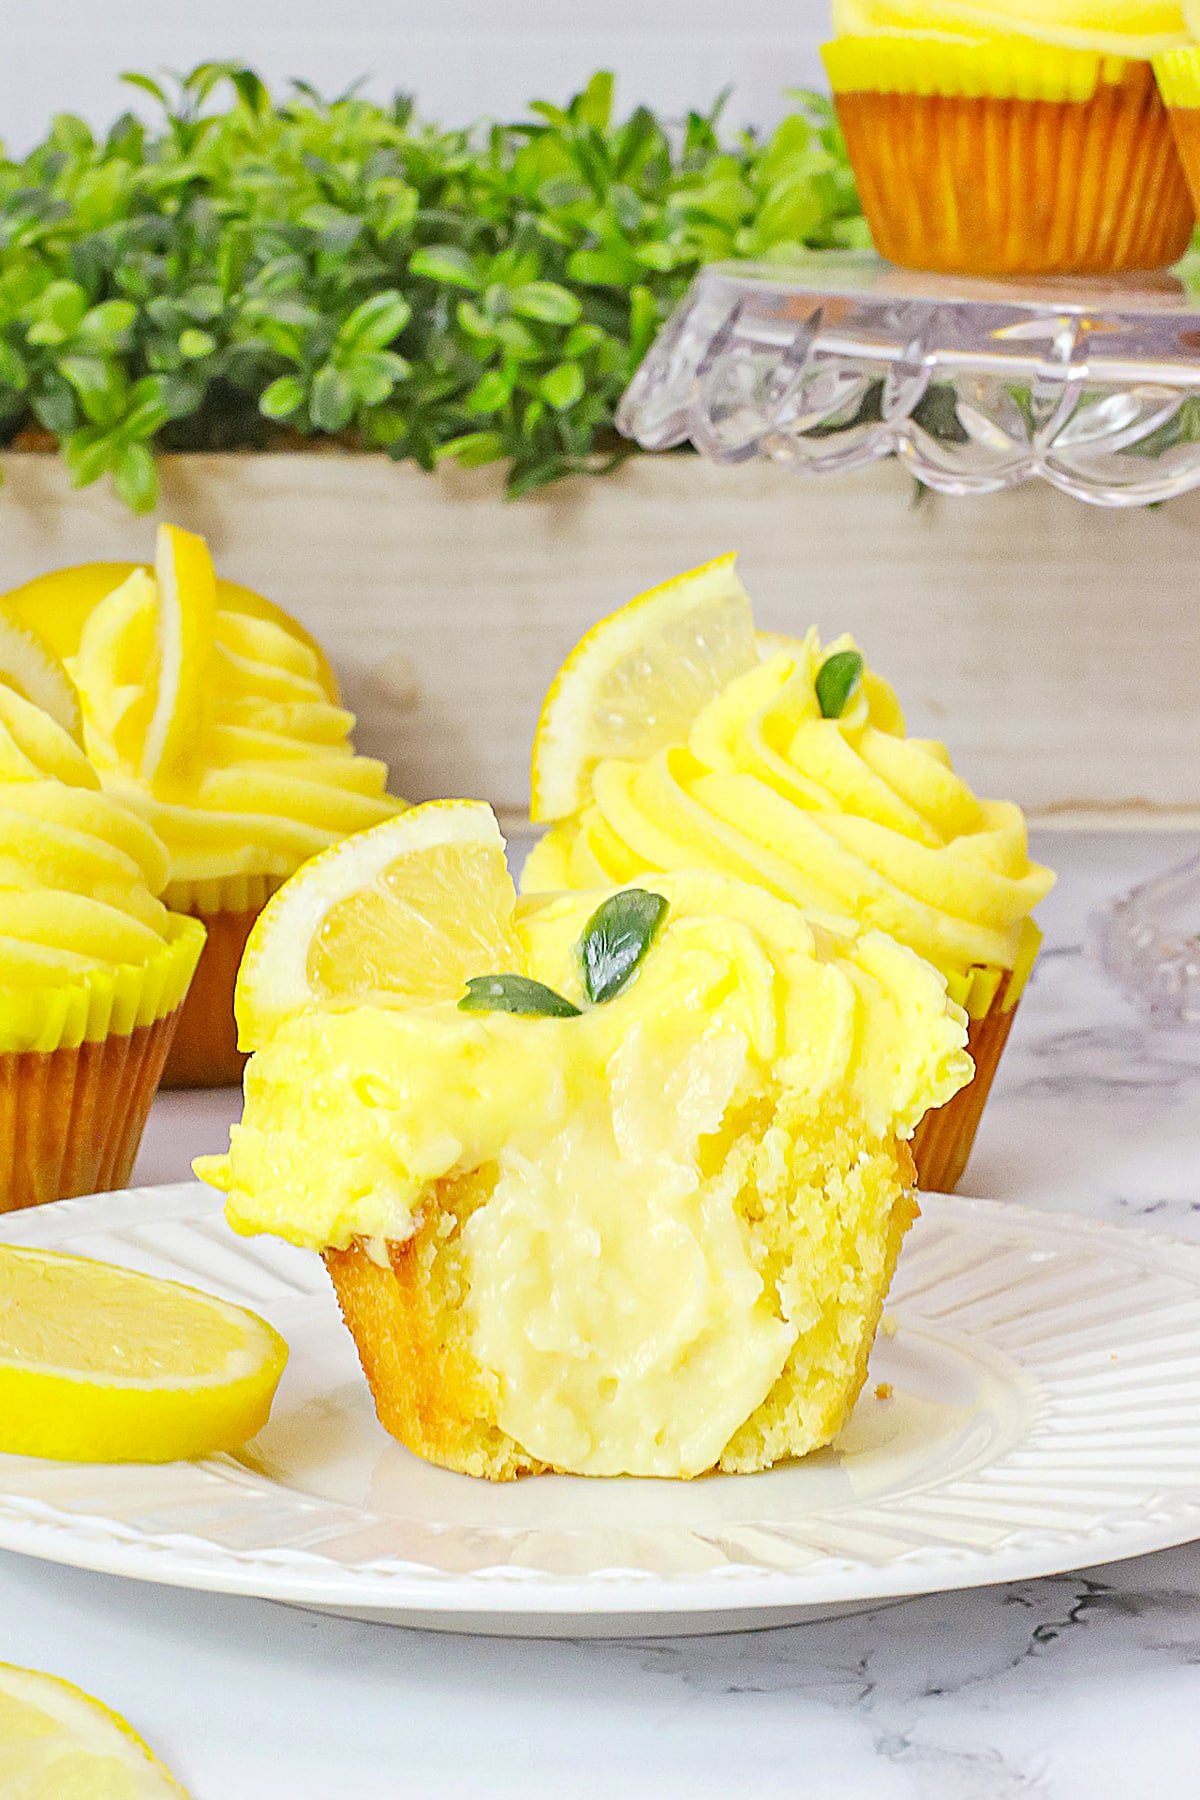 lemon cupcakes cut in half to show filling